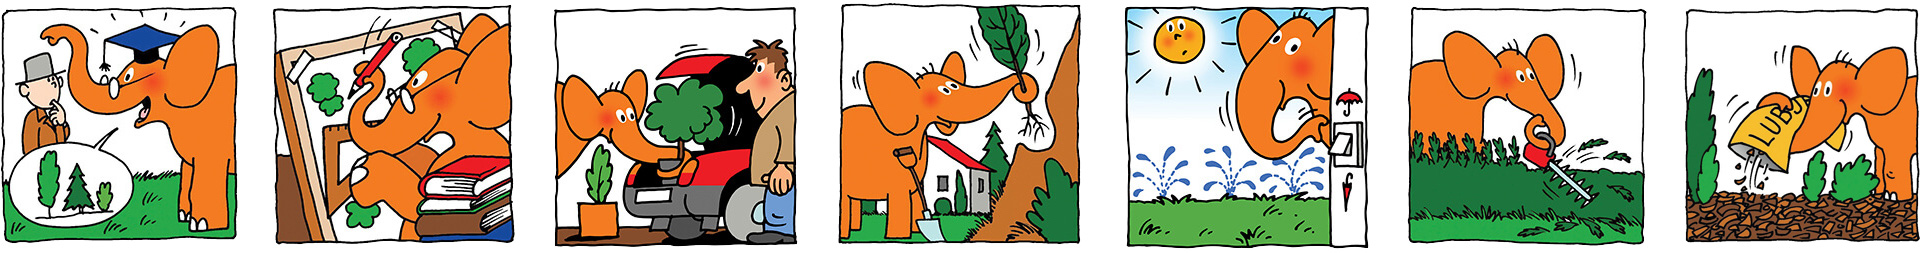 Geschichte des orangen Elefanten